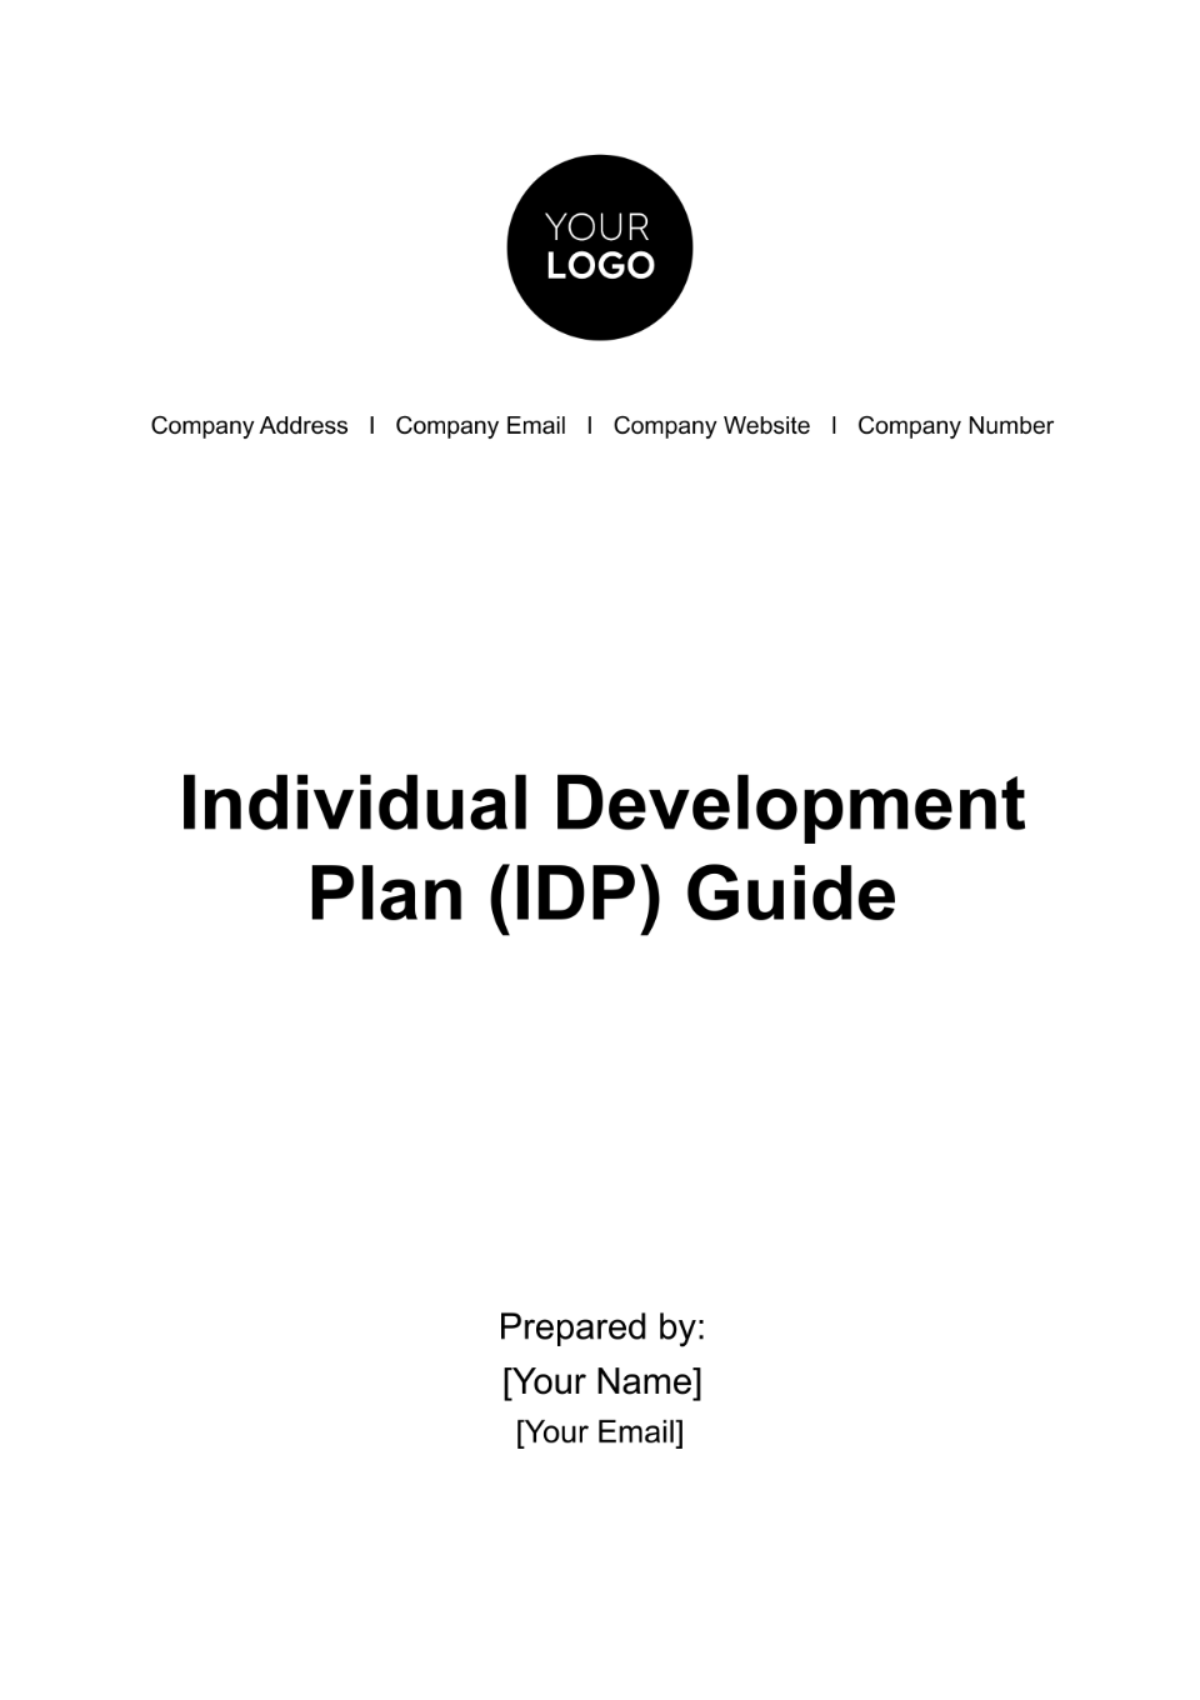 Free Individual Development Plan (IDP) Guide HR Template